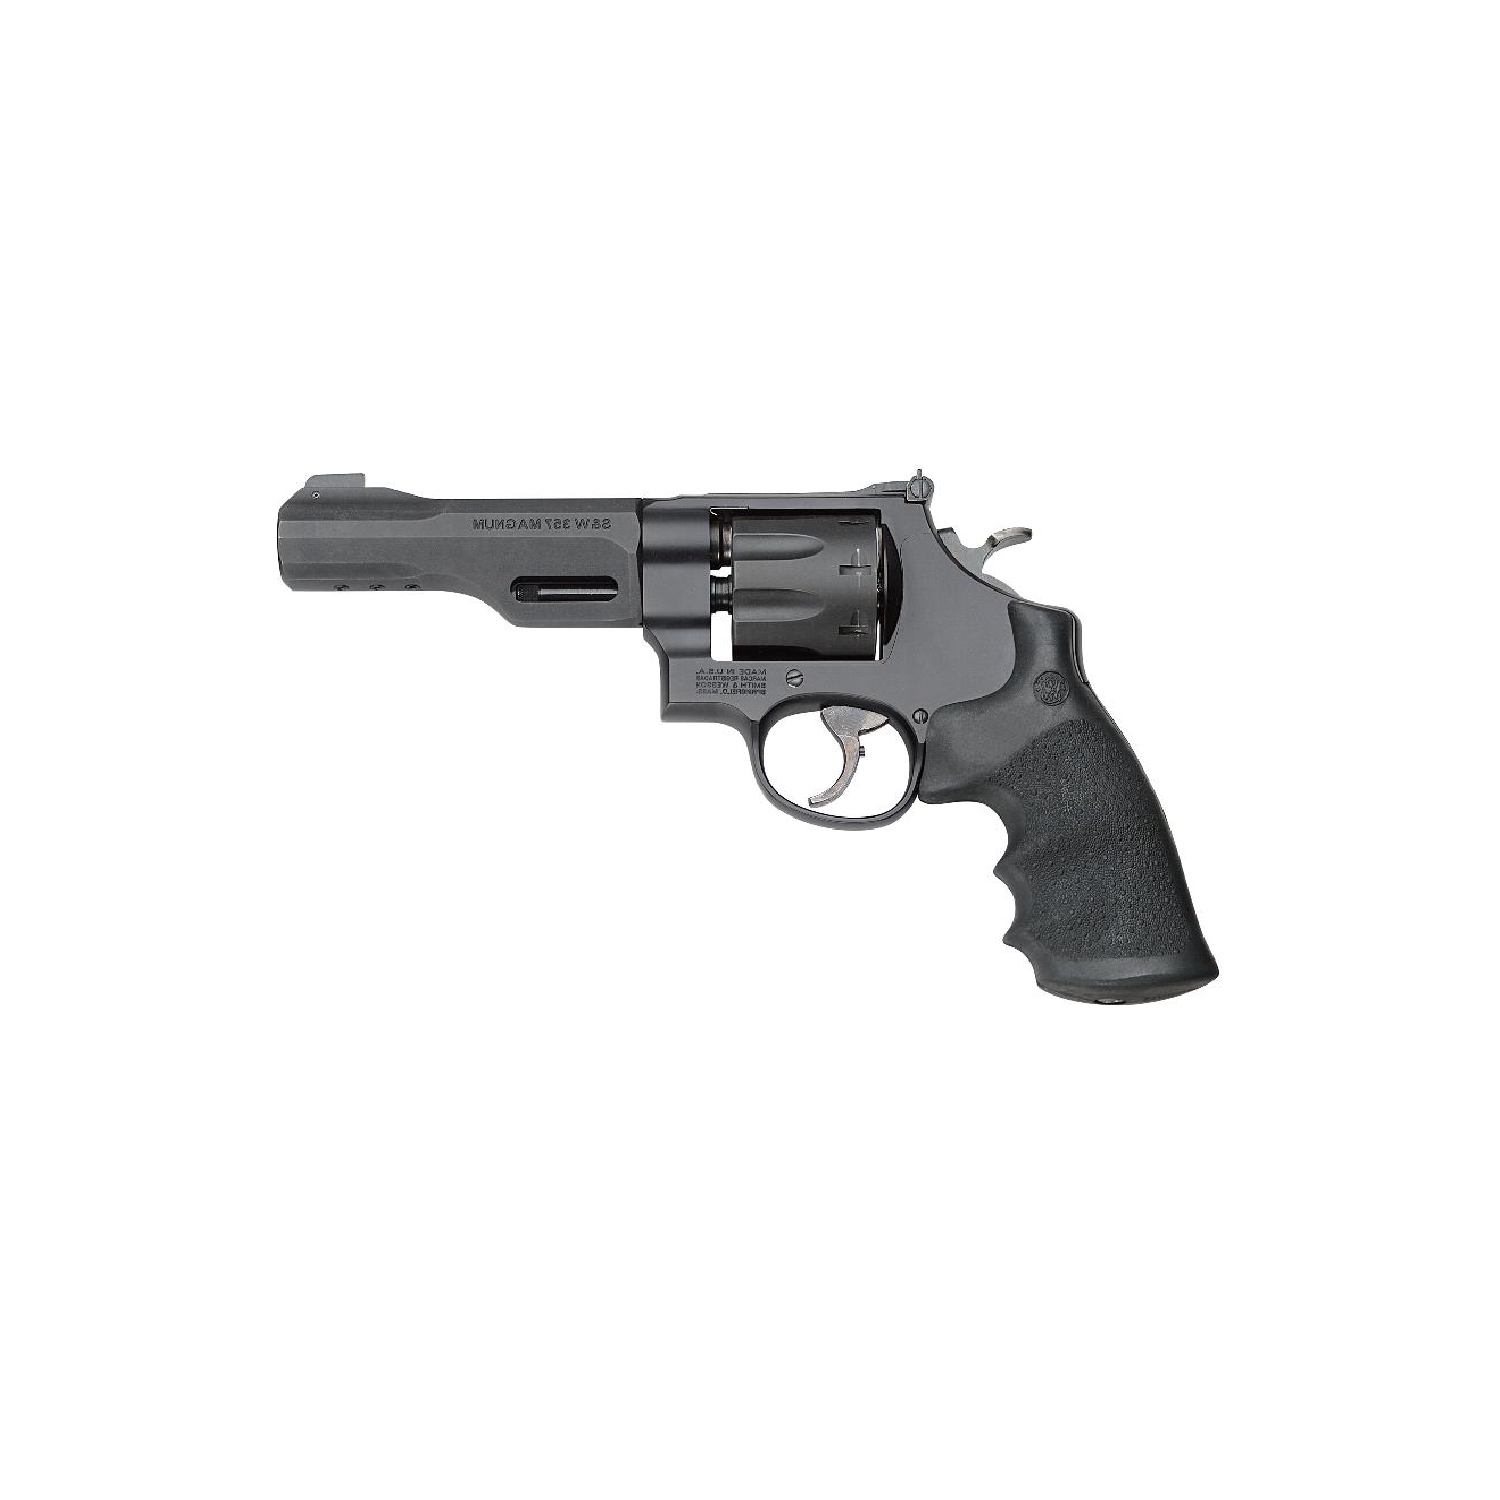 Smith & Wesson Mod. 327 TRR8, .357 Magnum